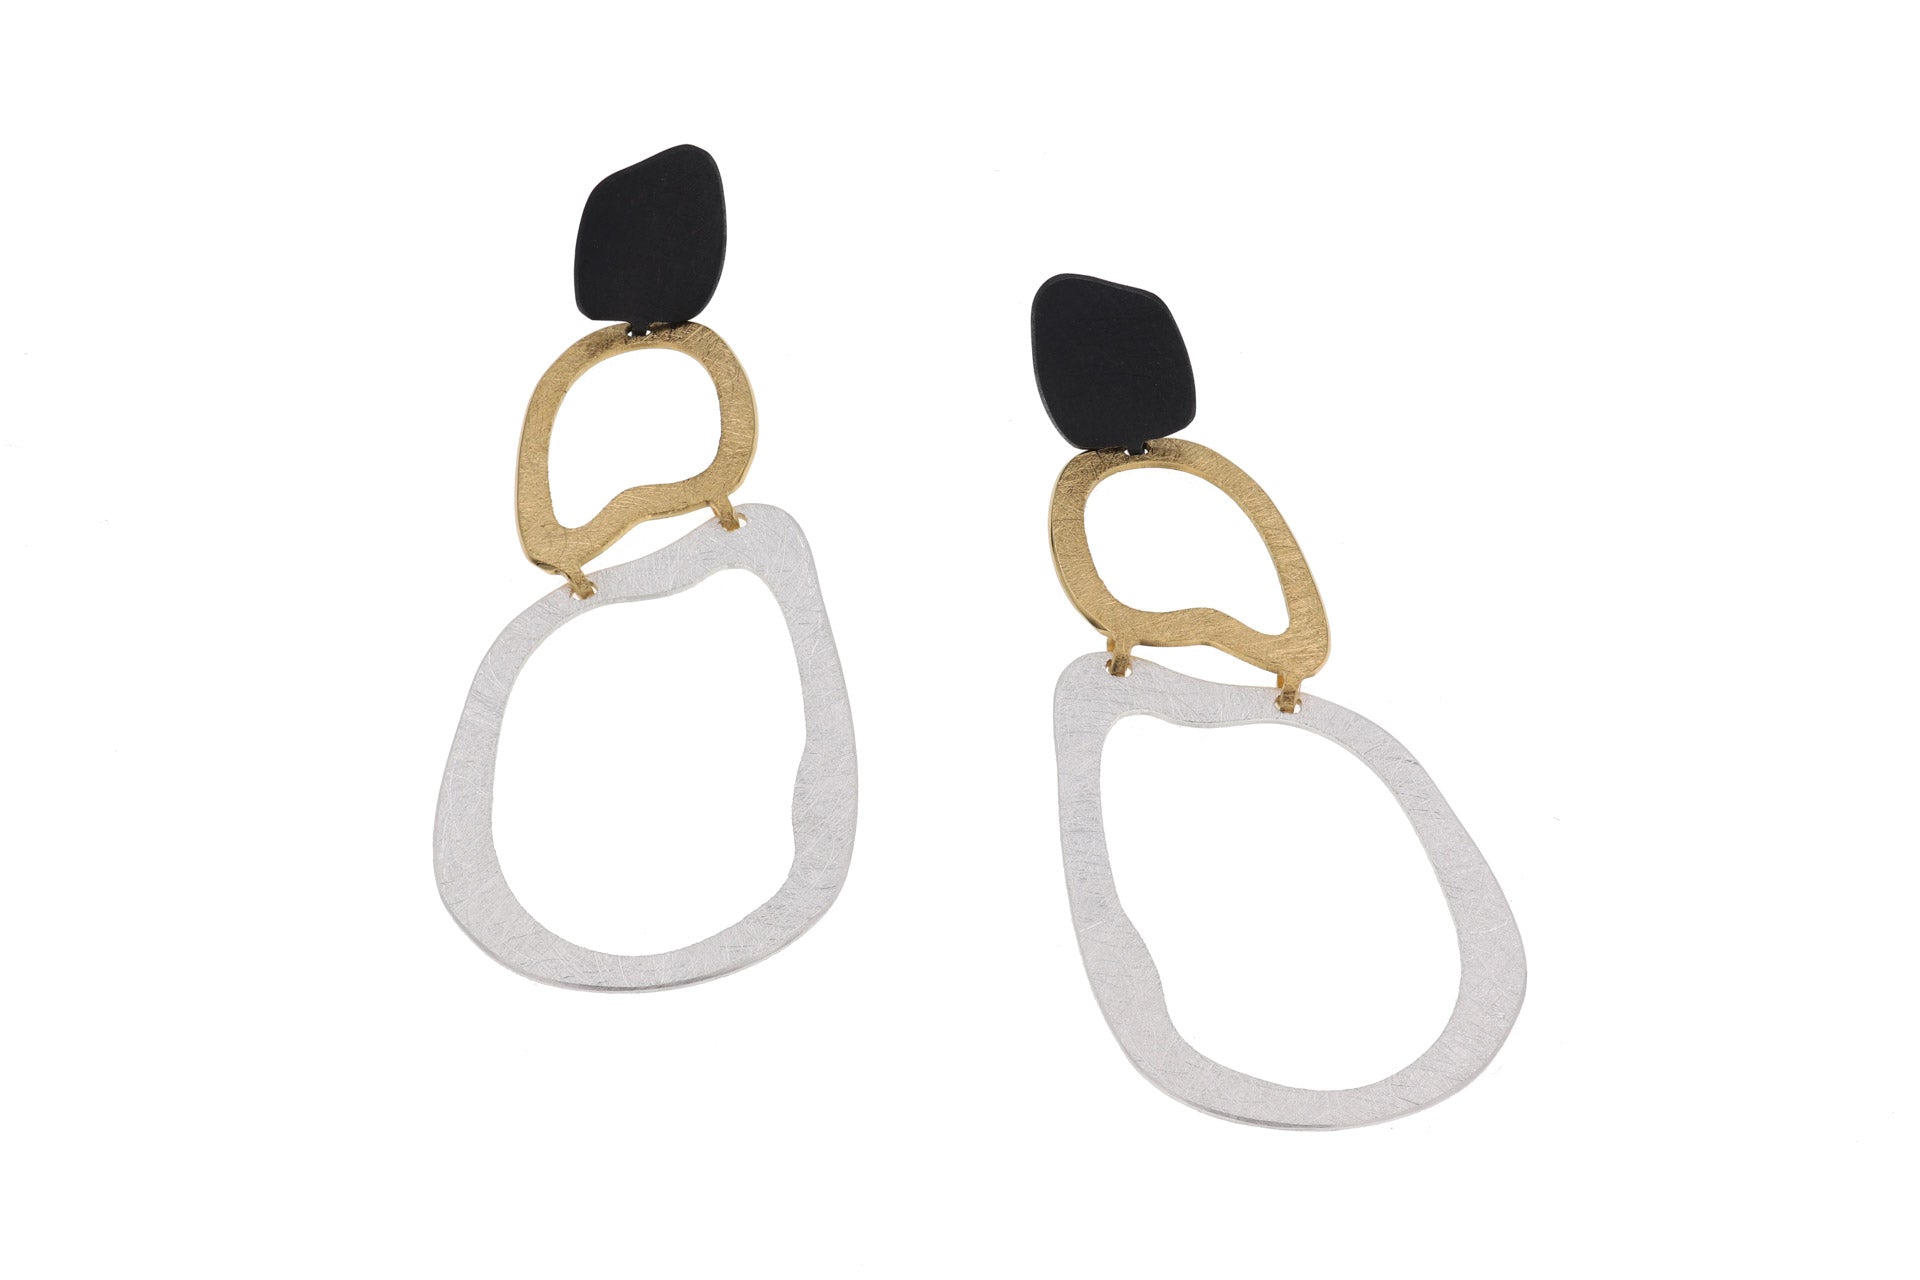 Mixed Loop Earrings - The Nancy Smillie Shop - Art, Jewellery & Designer Gifts Glasgow